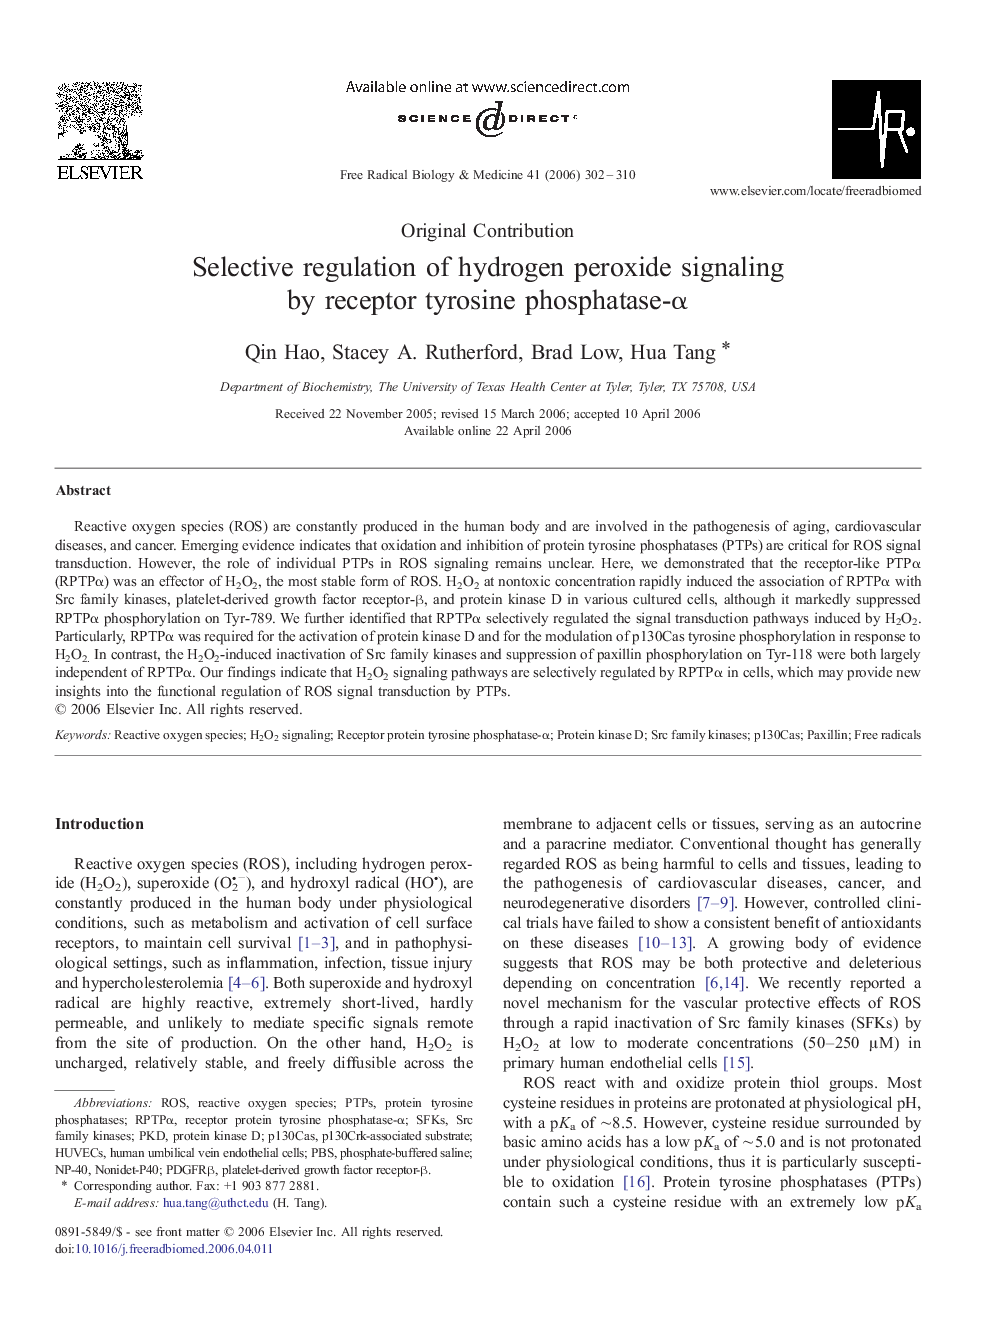 Selective regulation of hydrogen peroxide signaling by receptor tyrosine phosphatase-α